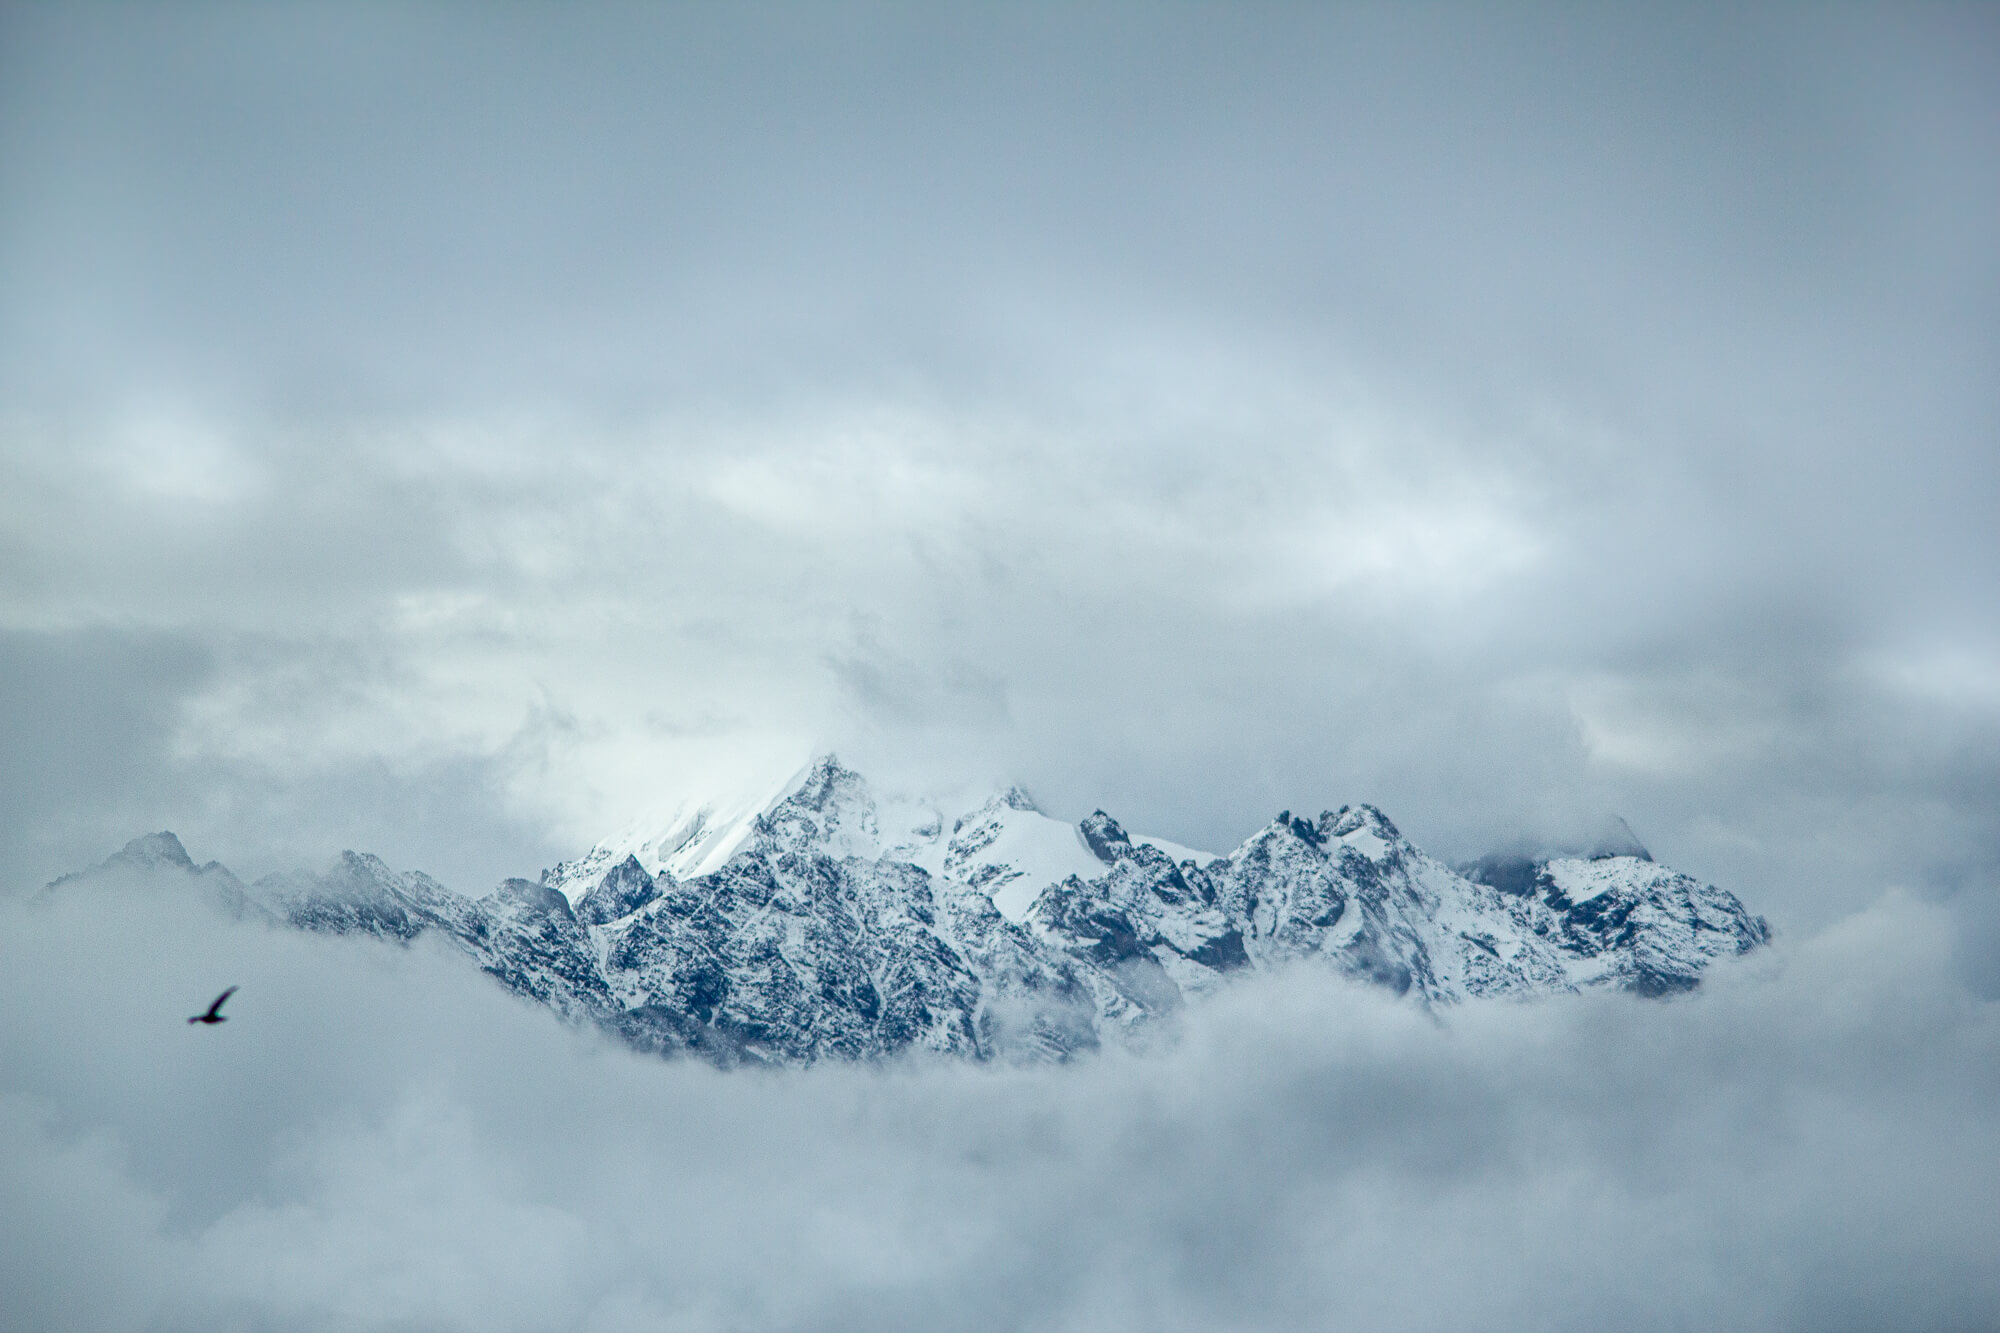 Trek in Nepal - fantastic views